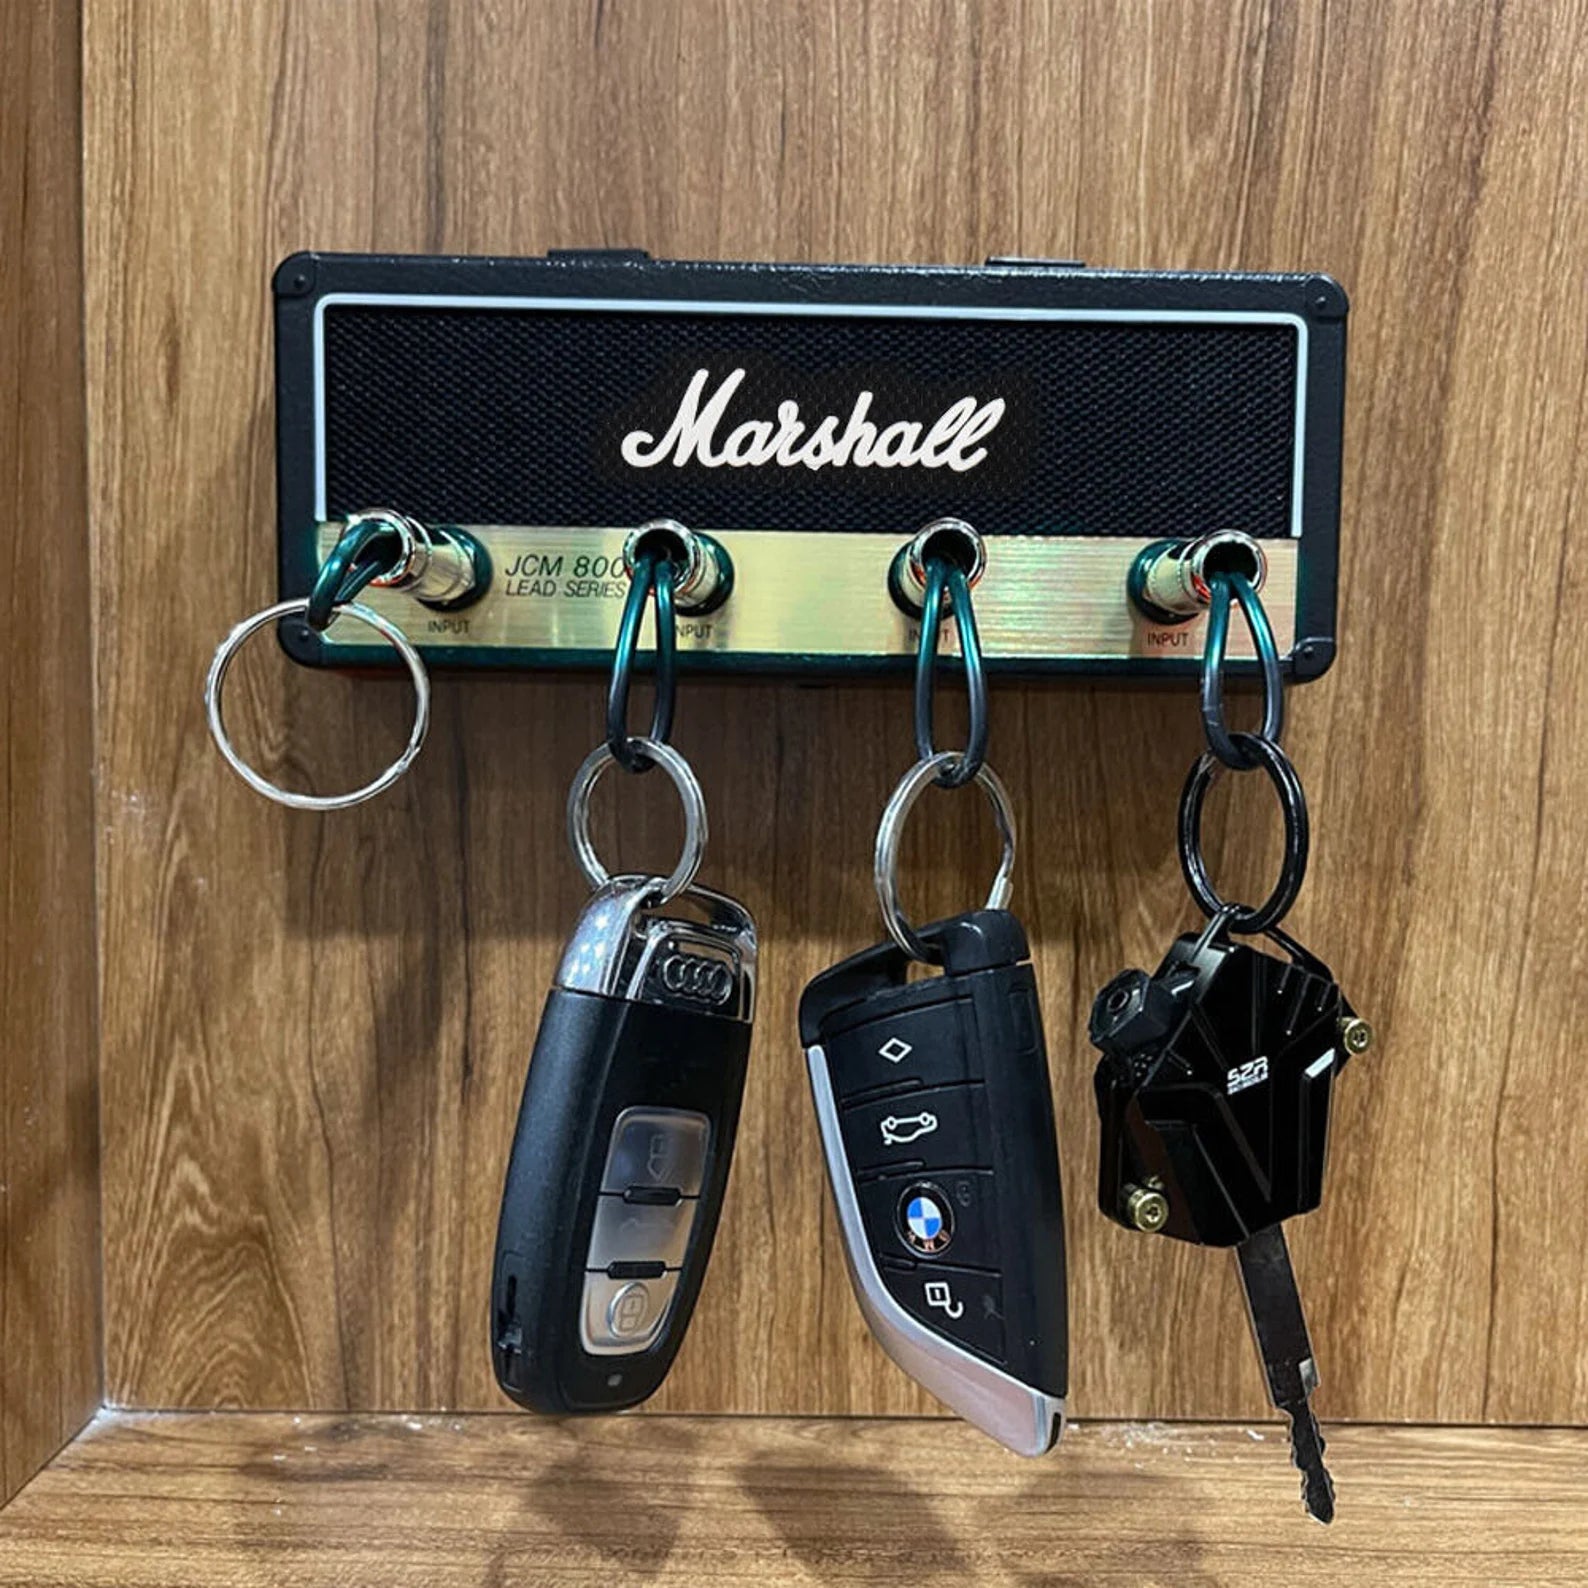 Marshall key holder -  France